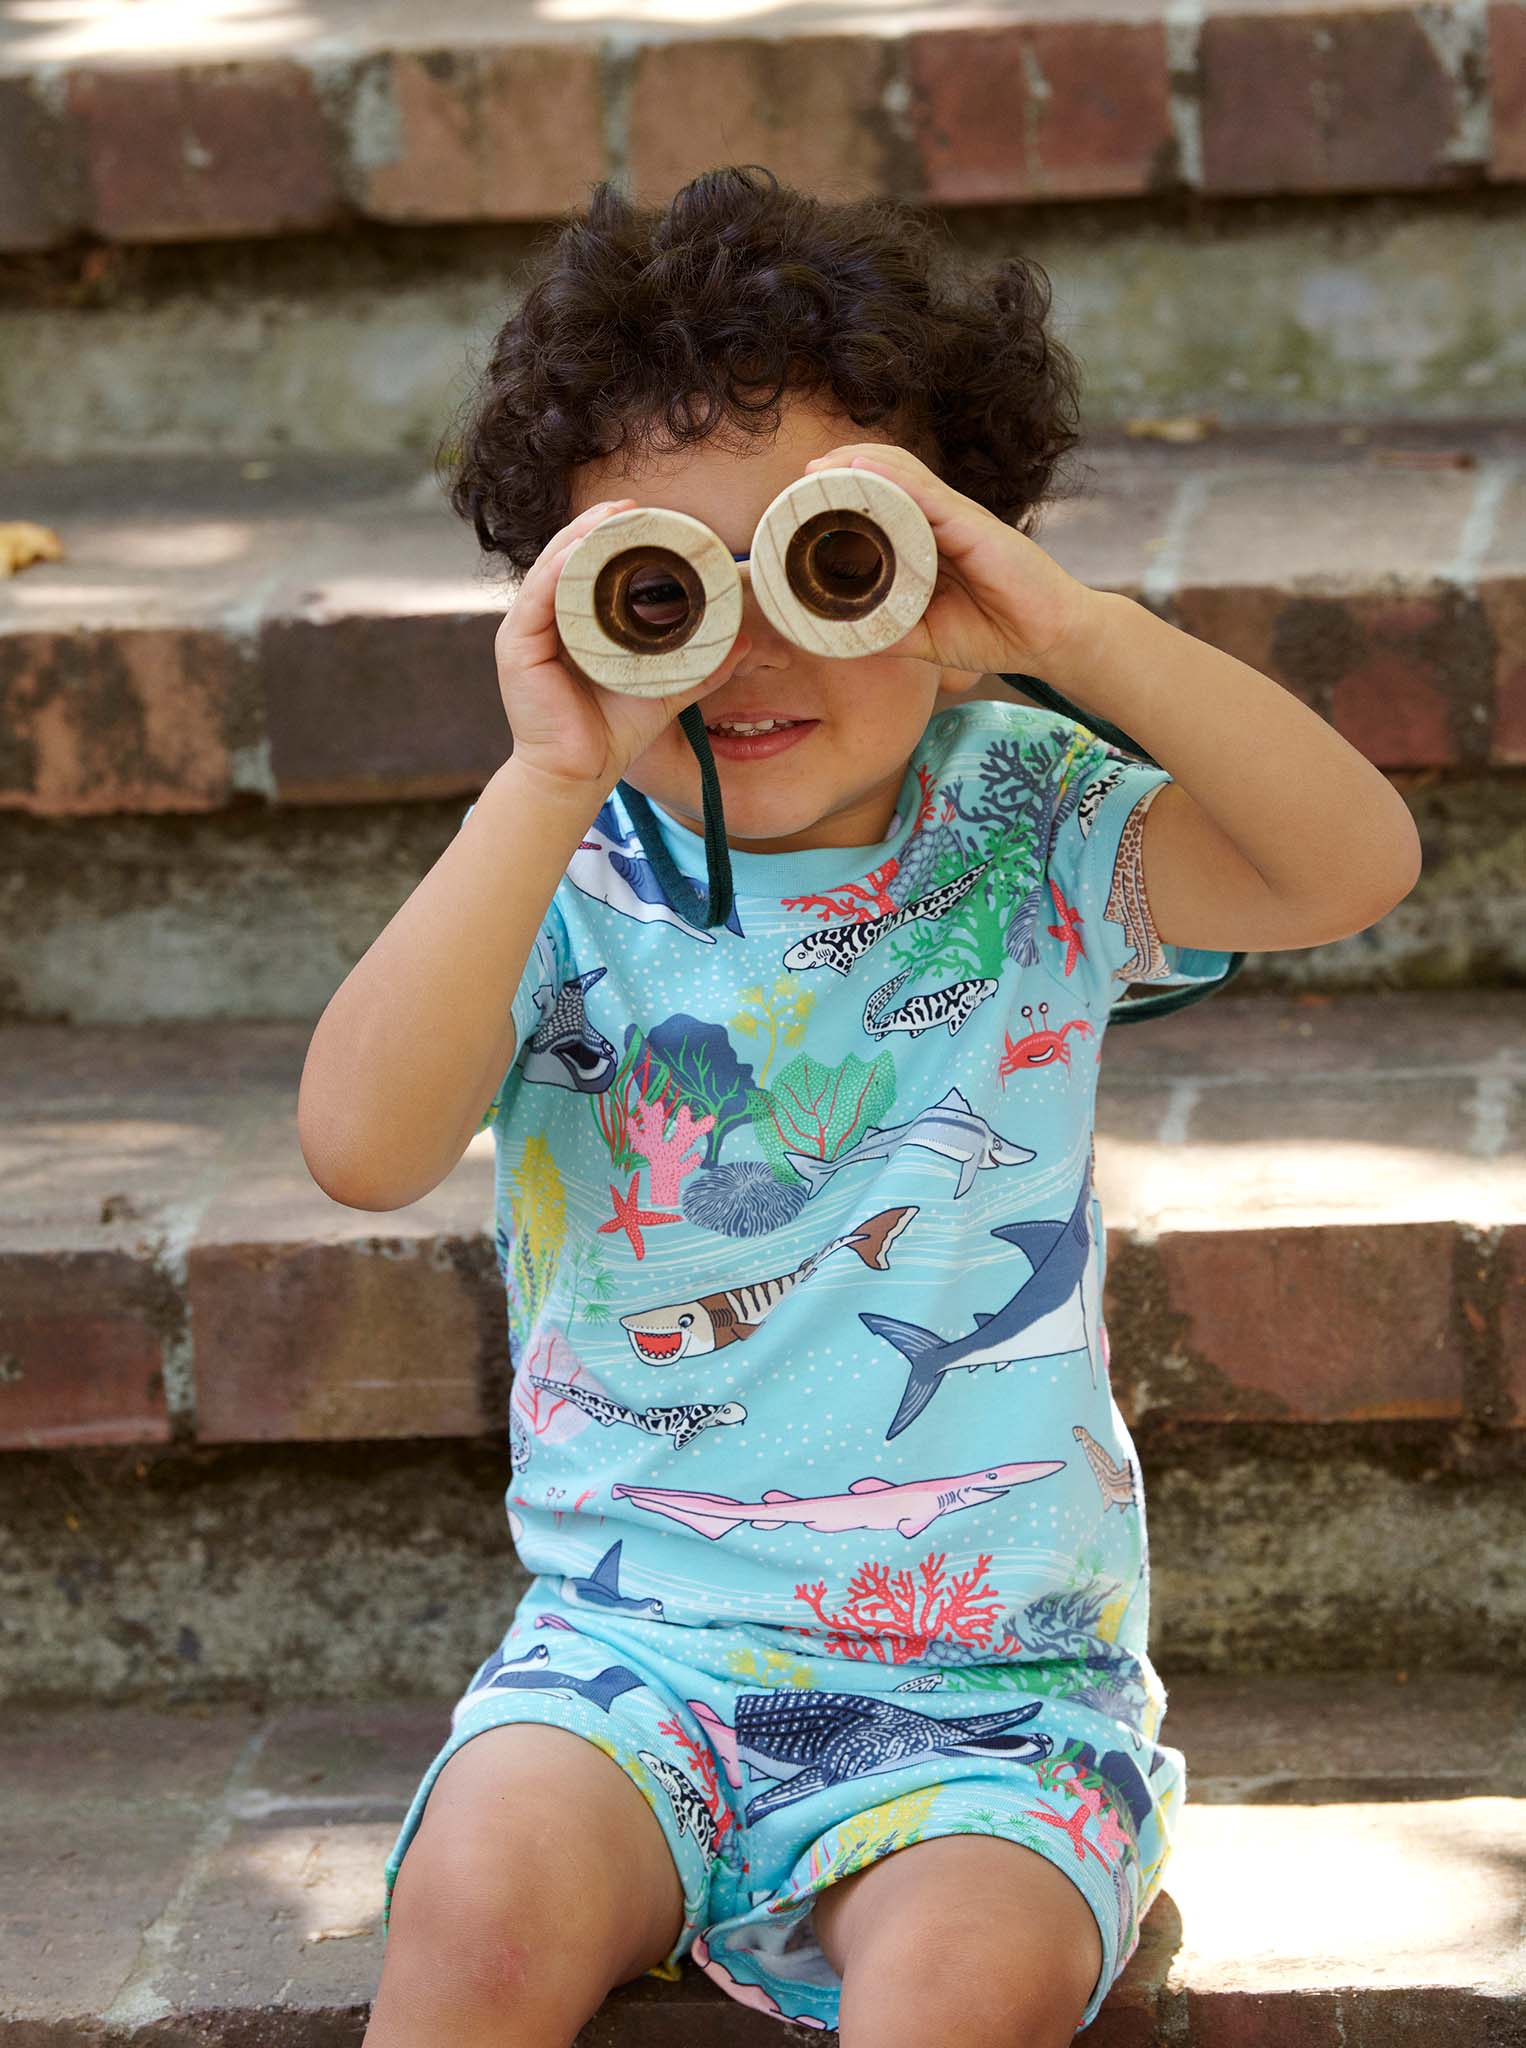 Sealife Print Blue Kids Shorts from Polarn O. Pyret Kidswear. Made from 100% GOTS Organic Cotton.